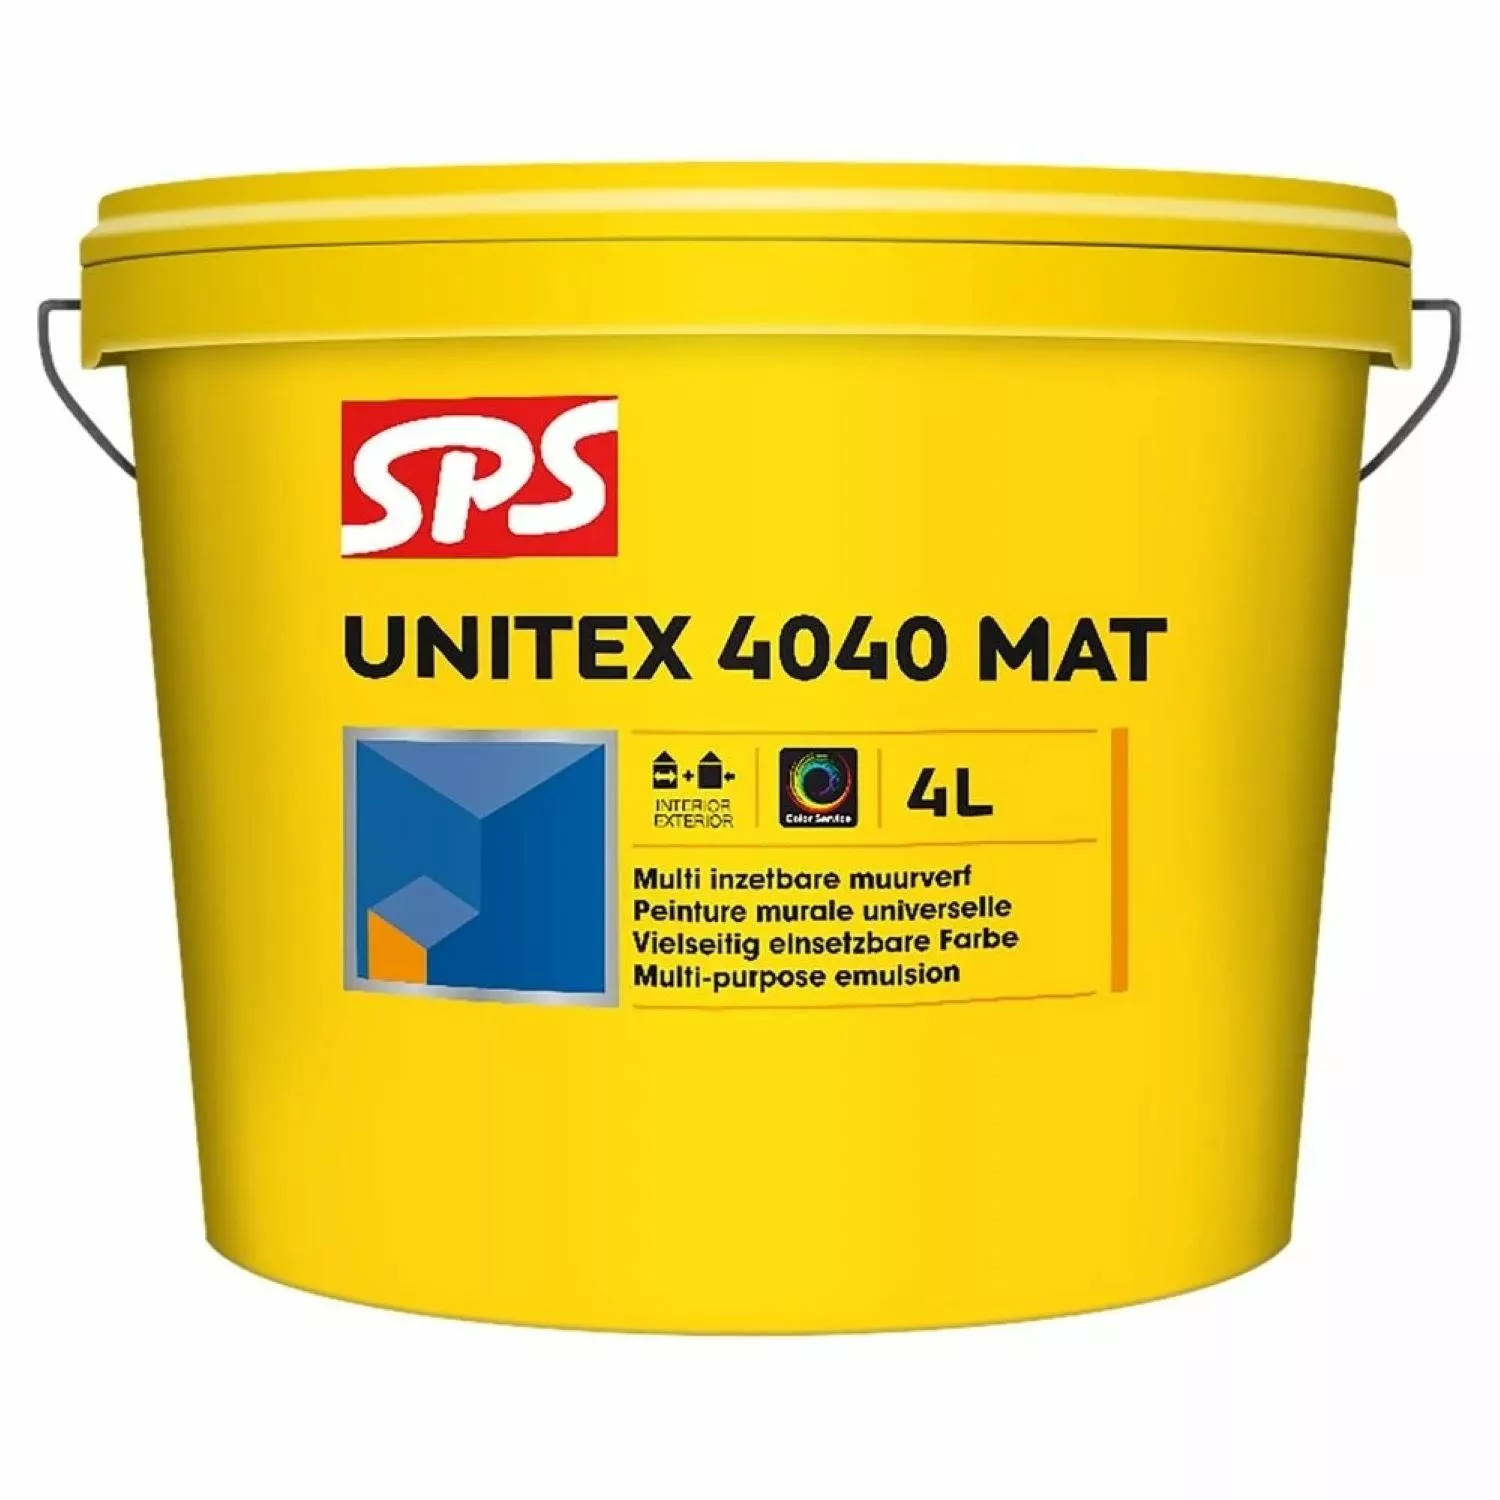 SPS Unitex 4040 Mat Muurverf - RAL 9010 zuiverwit - 4L-image